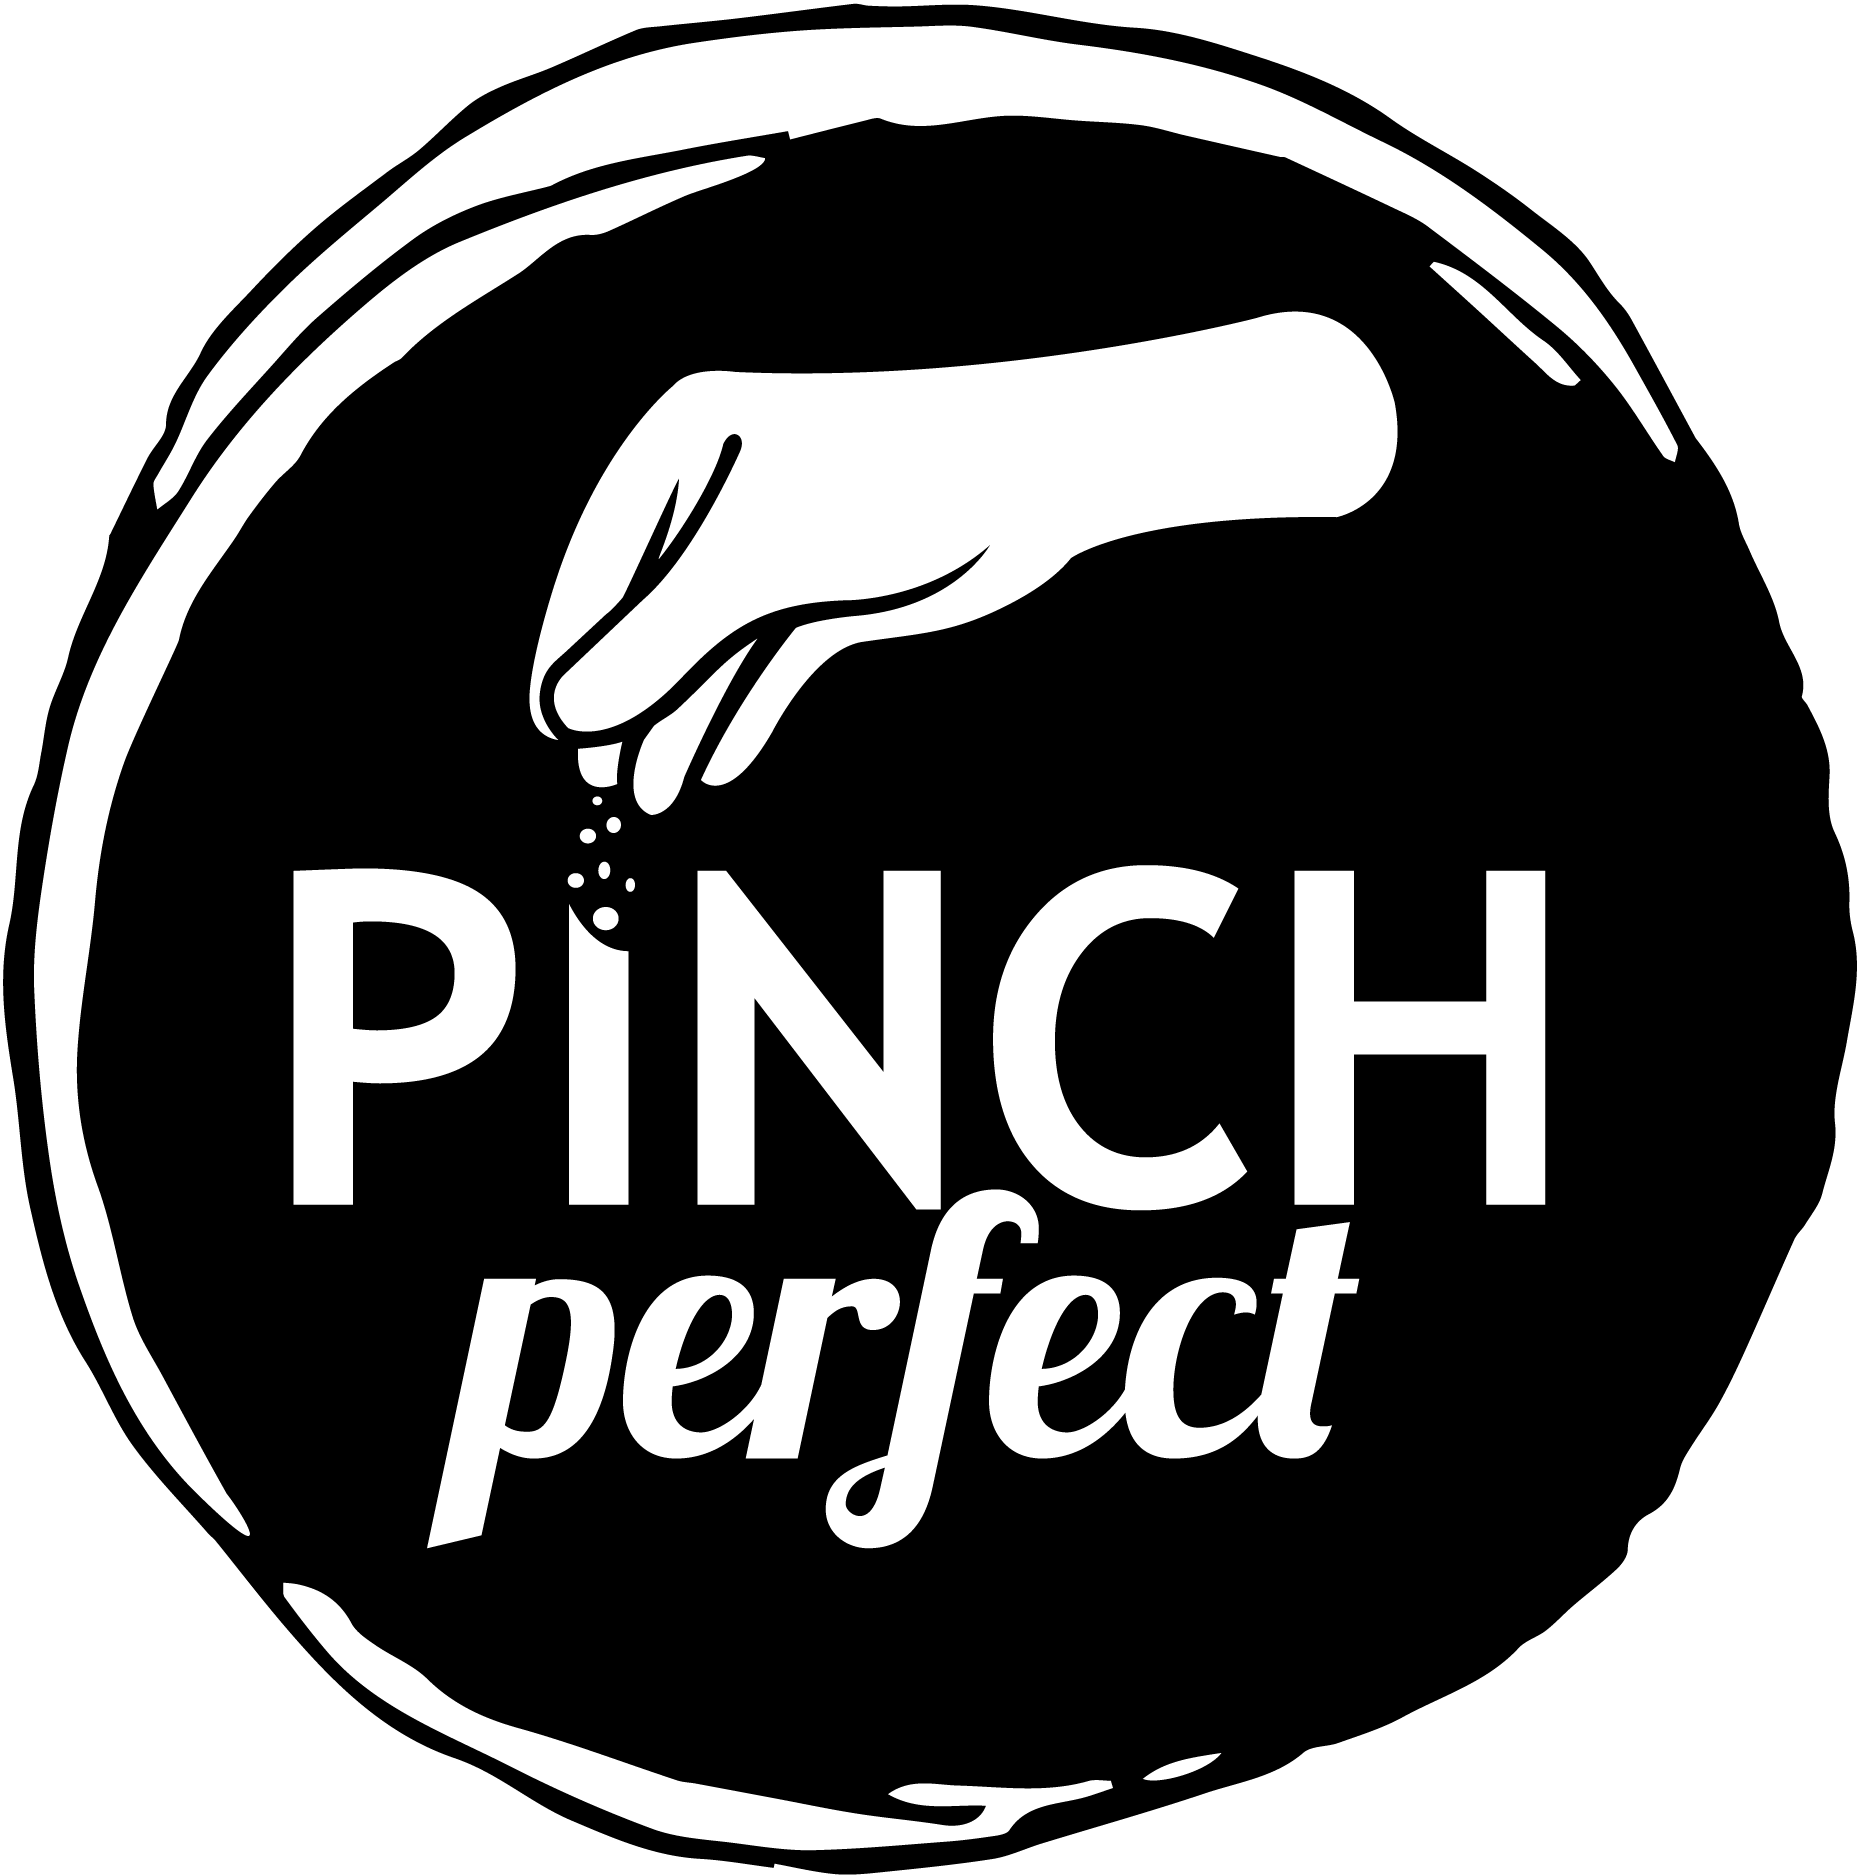 SPICE BLEND (99 designs - Top Des) – PinchPerfect